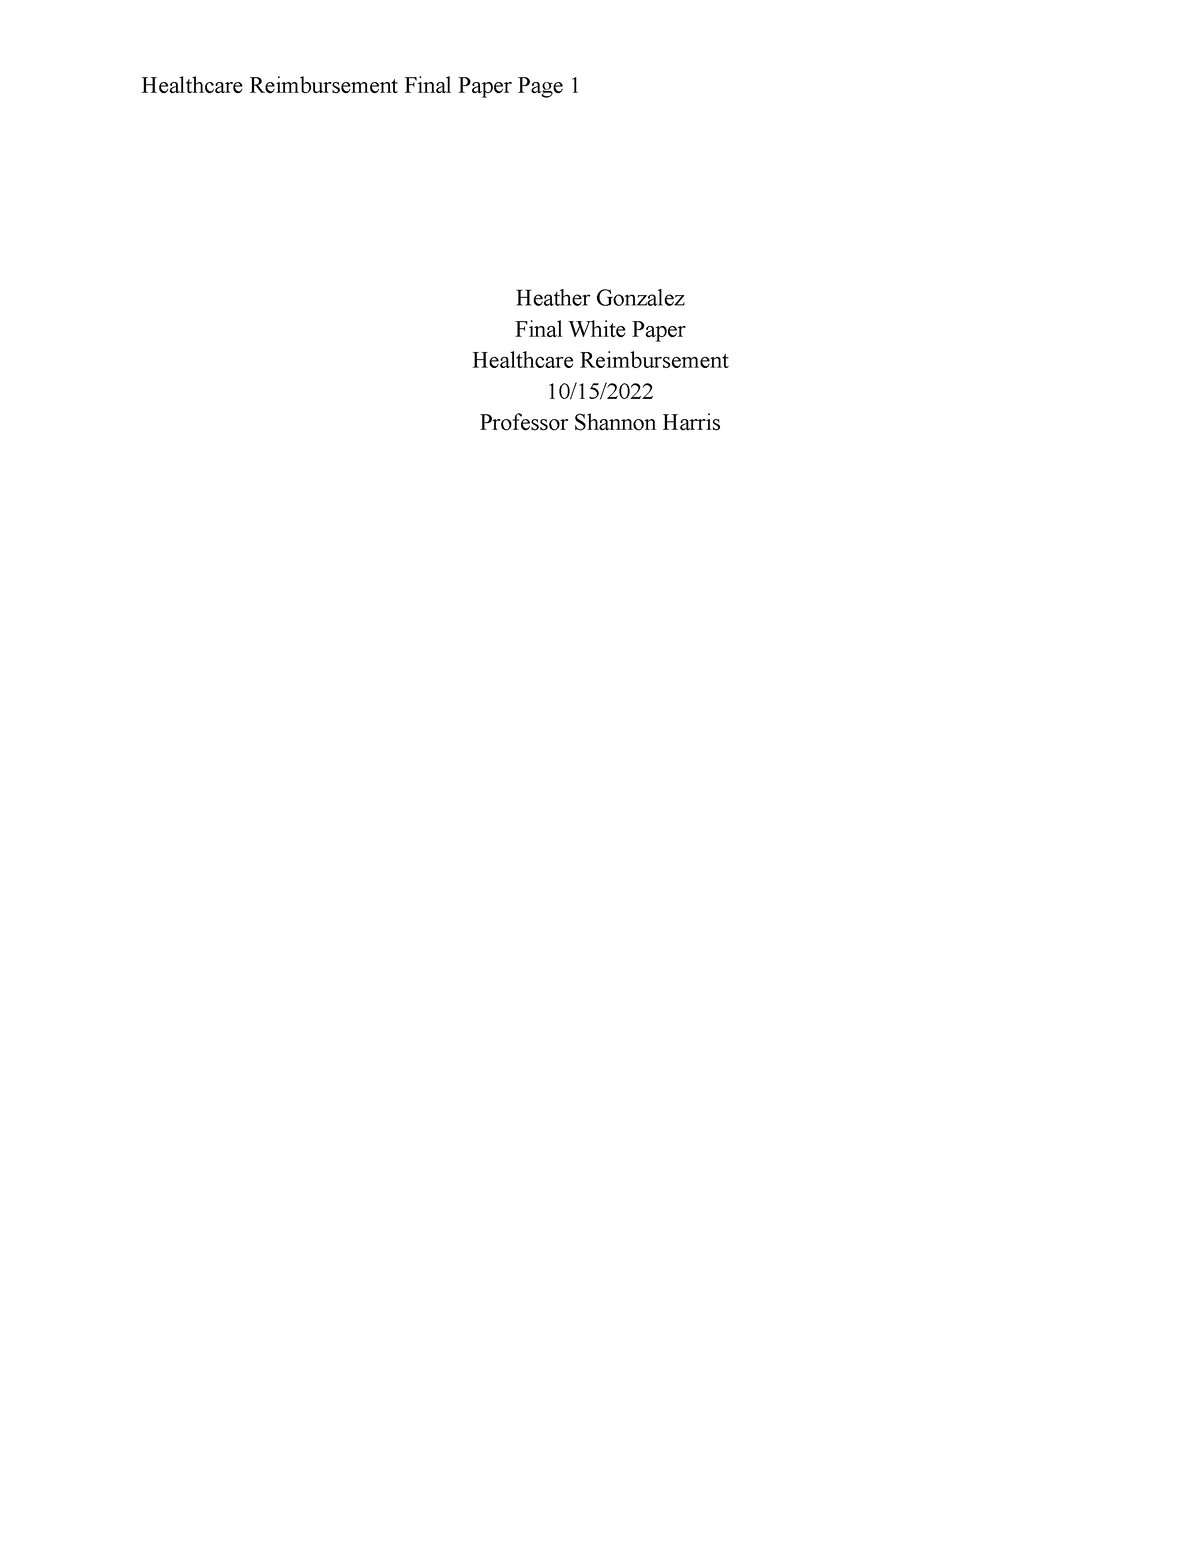 Healthcare Reimbursement - Final Paper - Heather Gonzalez Final White ...